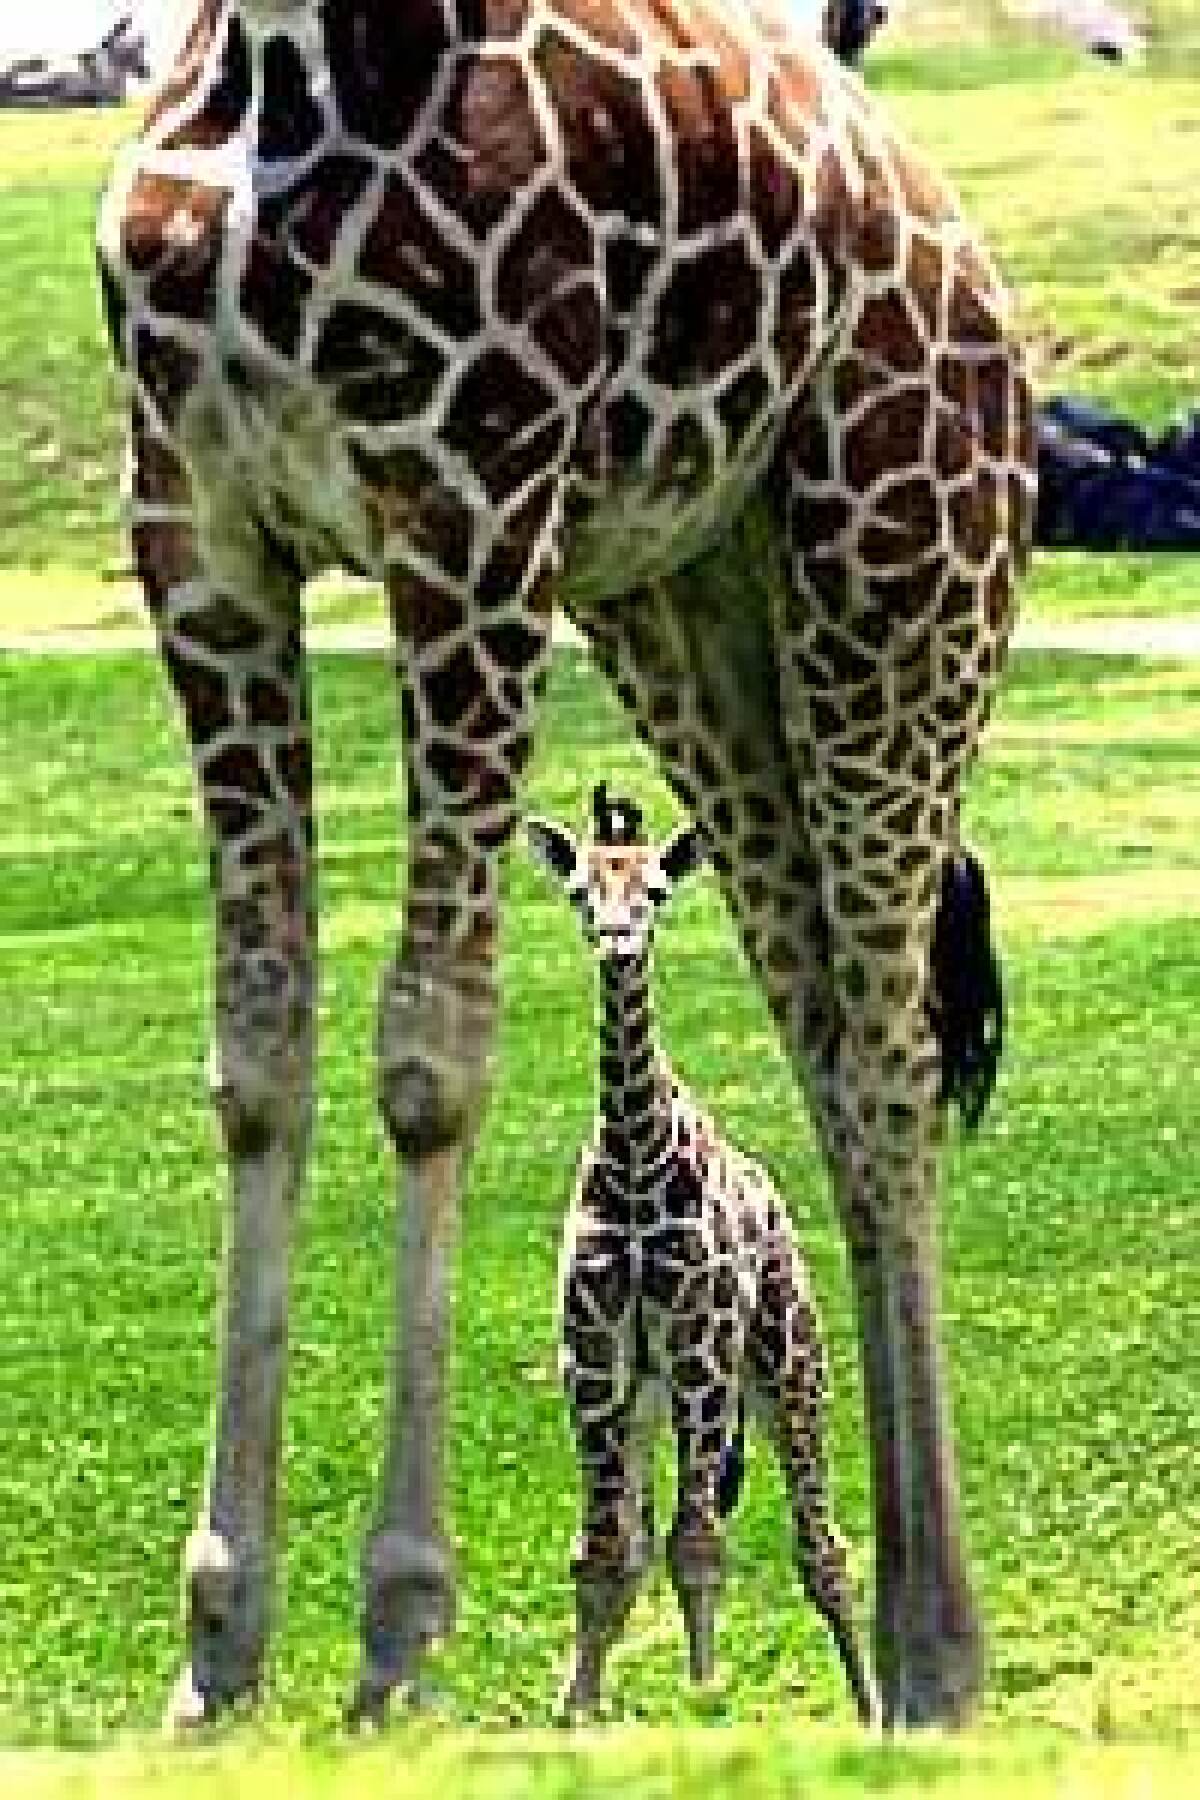 baby giraffes in the wild